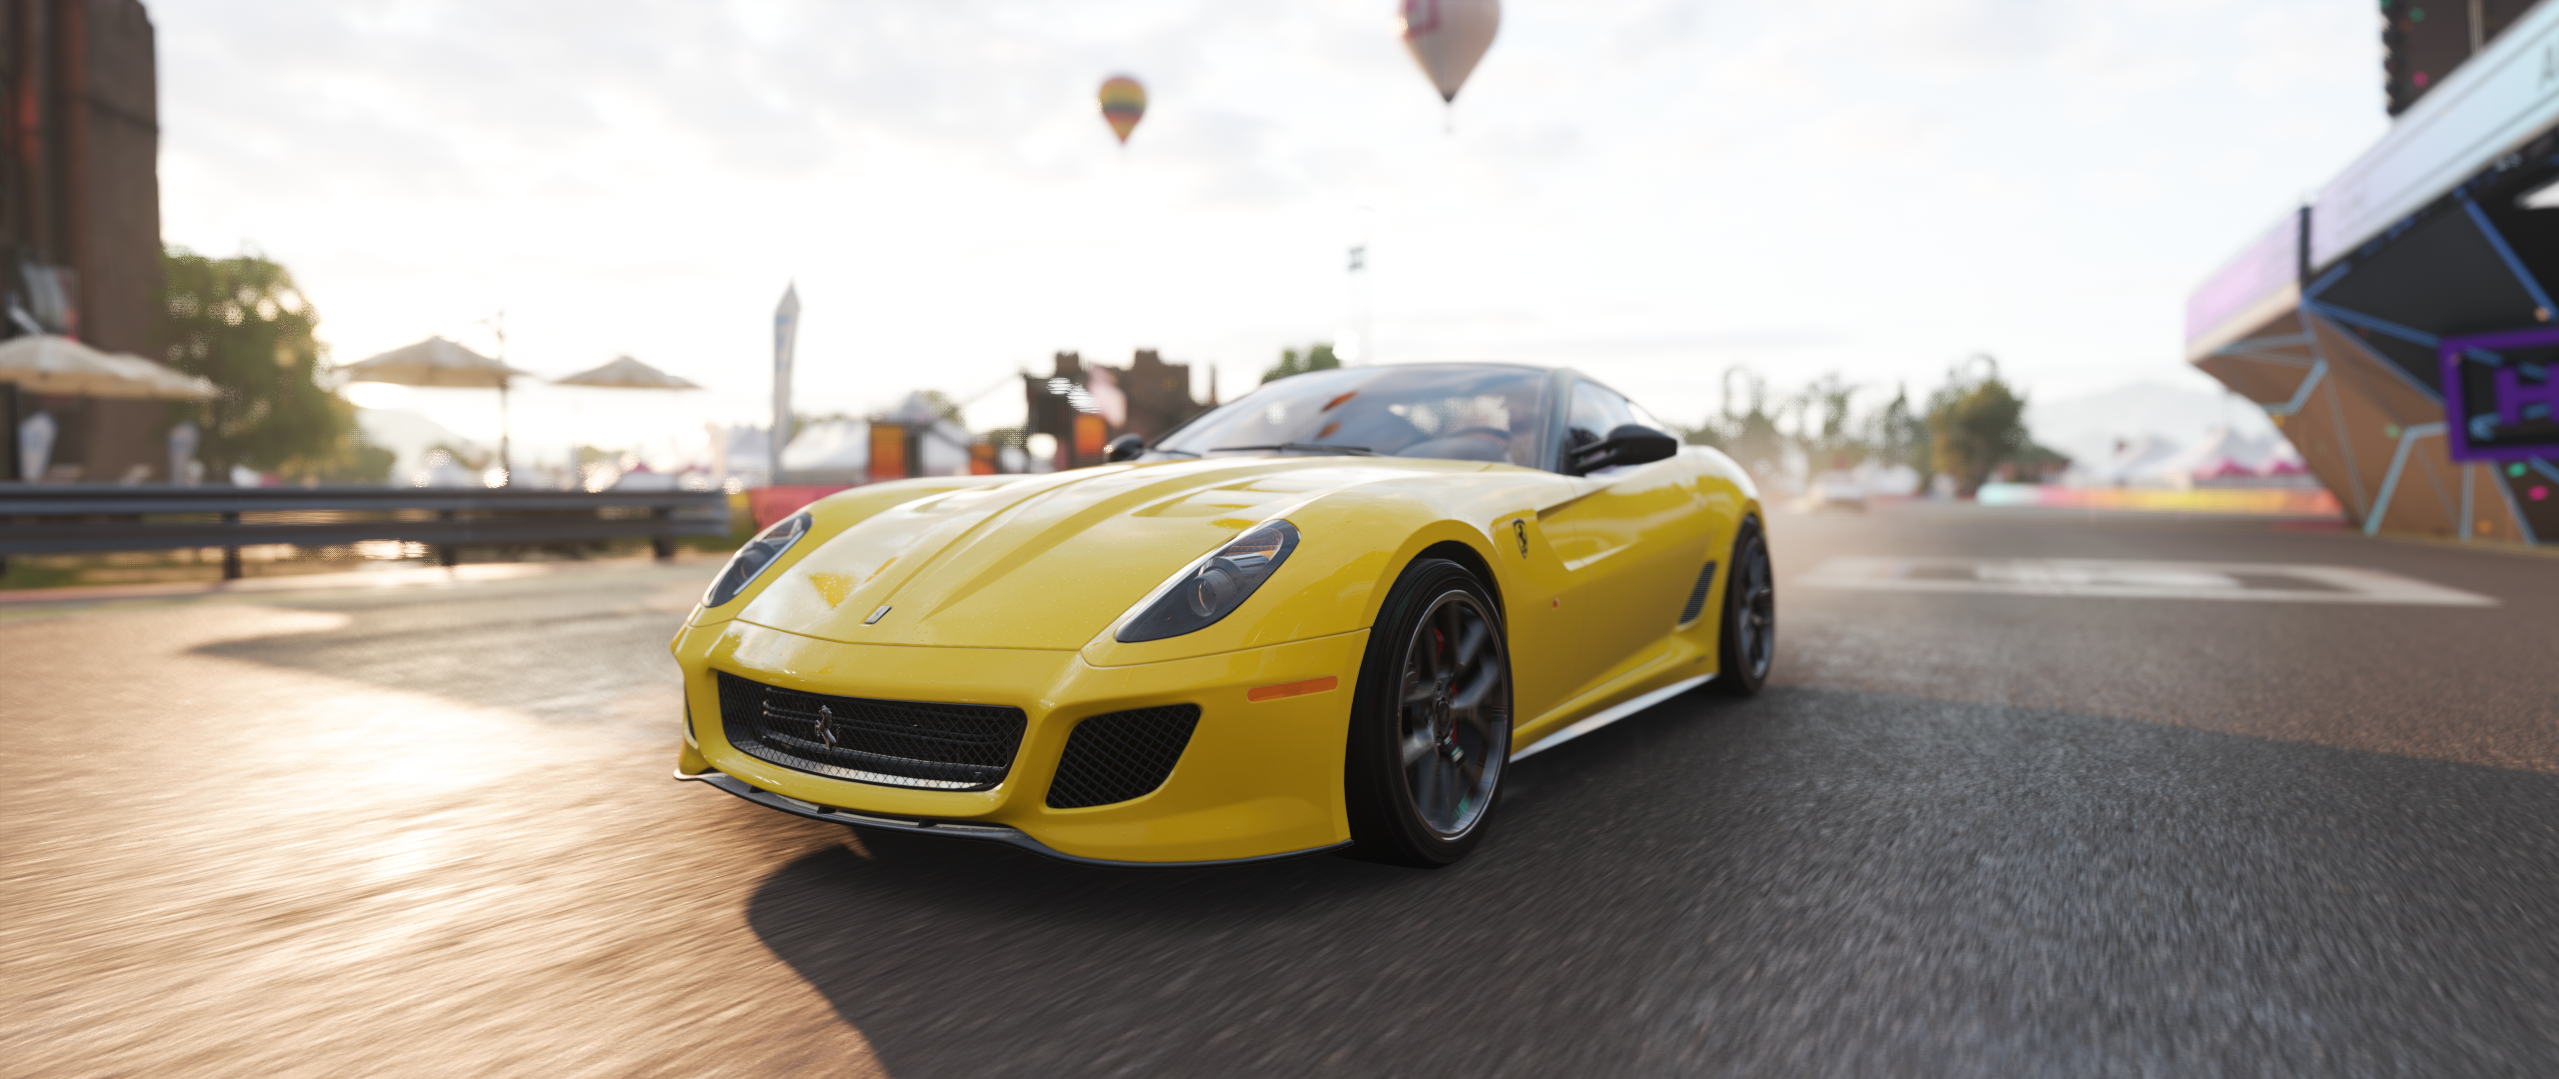 General 2559x1079 Forza Horizon 4 Ferrari Ferrari 599 video games car yellow cars screen shot vehicle